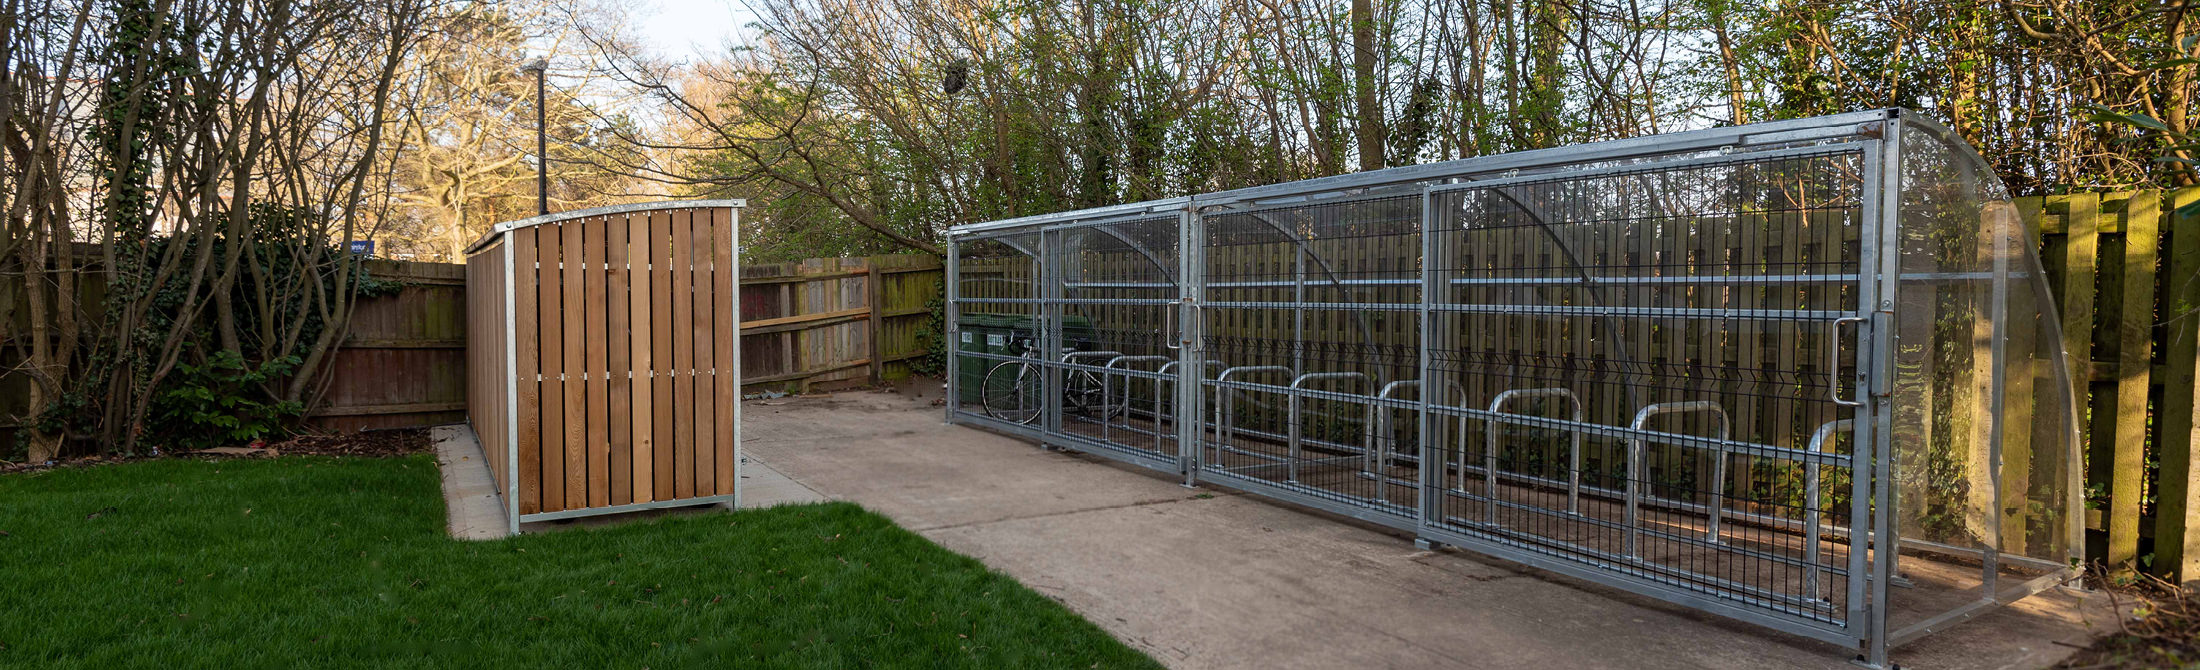 urbanspec CL Semi enclosed bike shelters